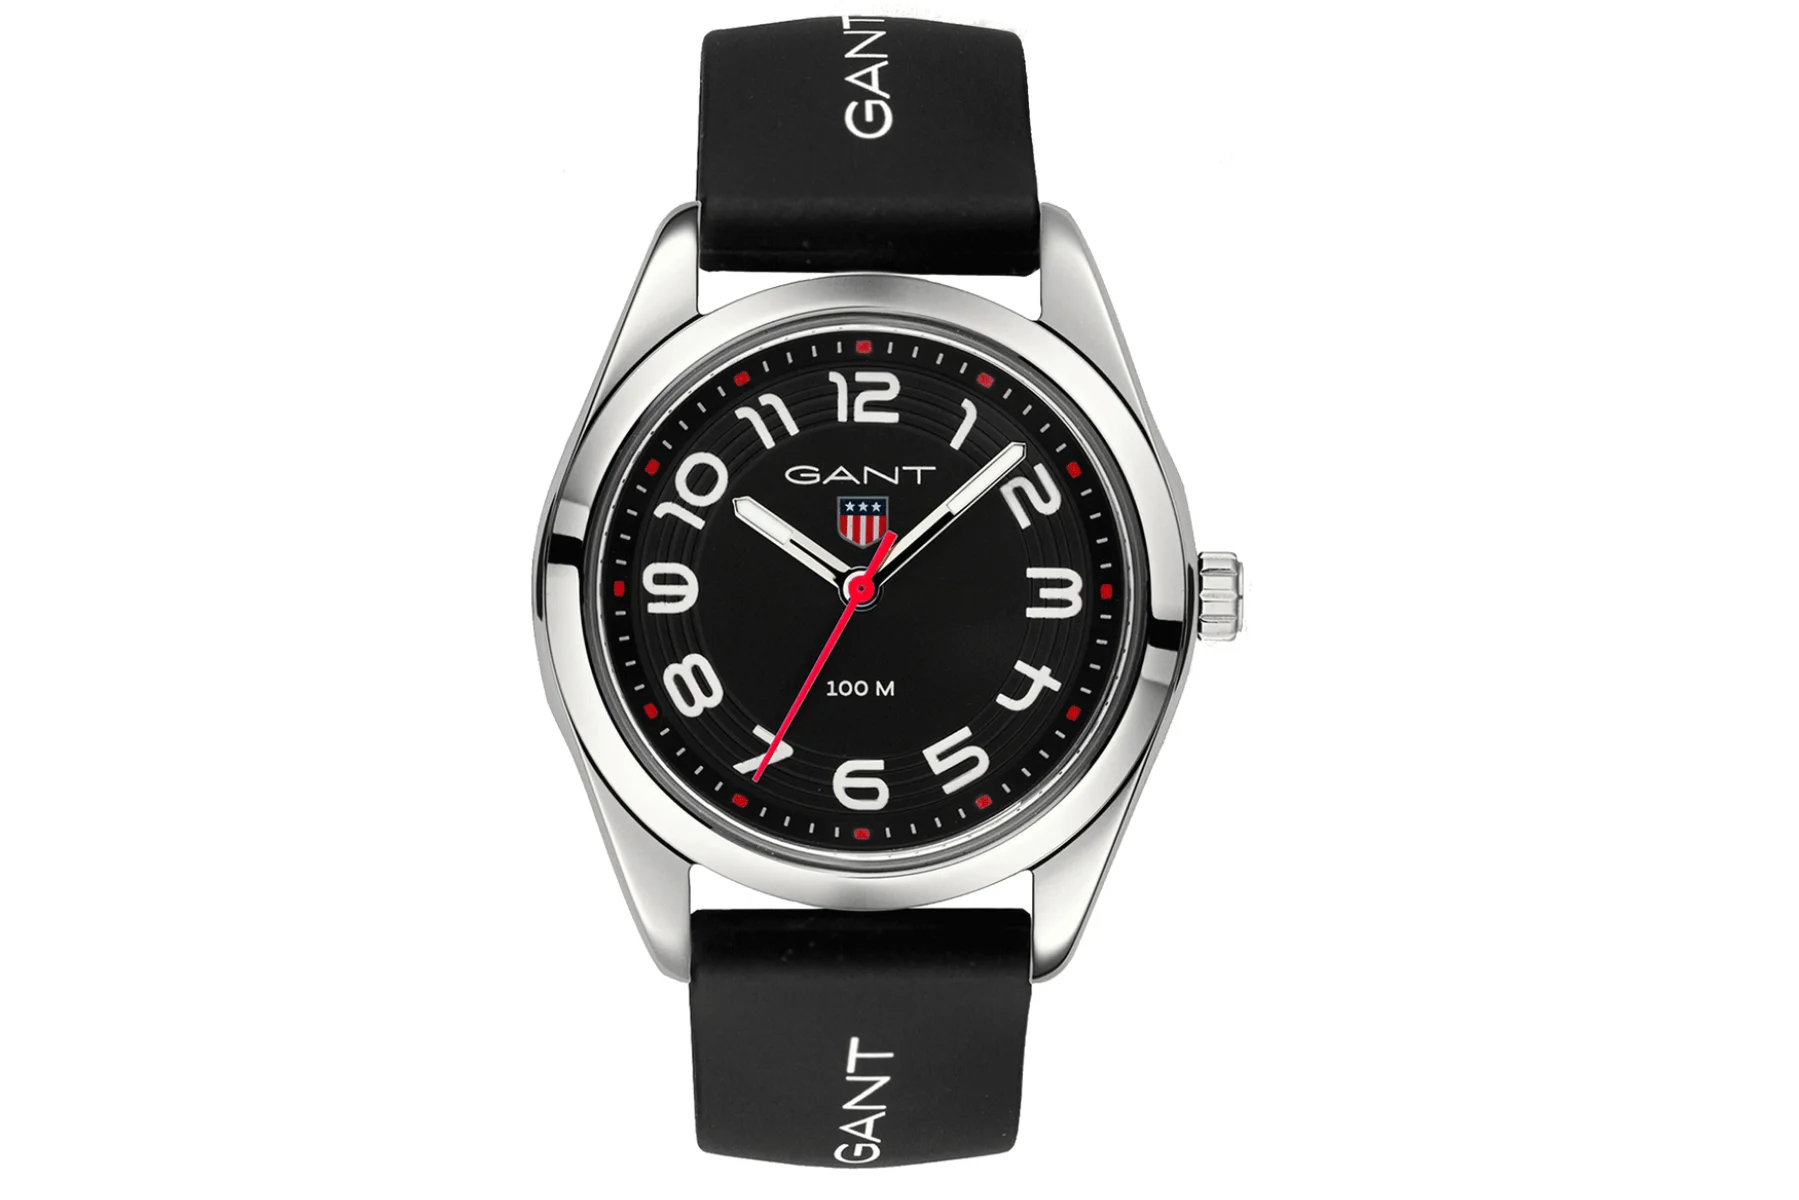 Detské náramkové hodinky Gant K280002-S kvalita